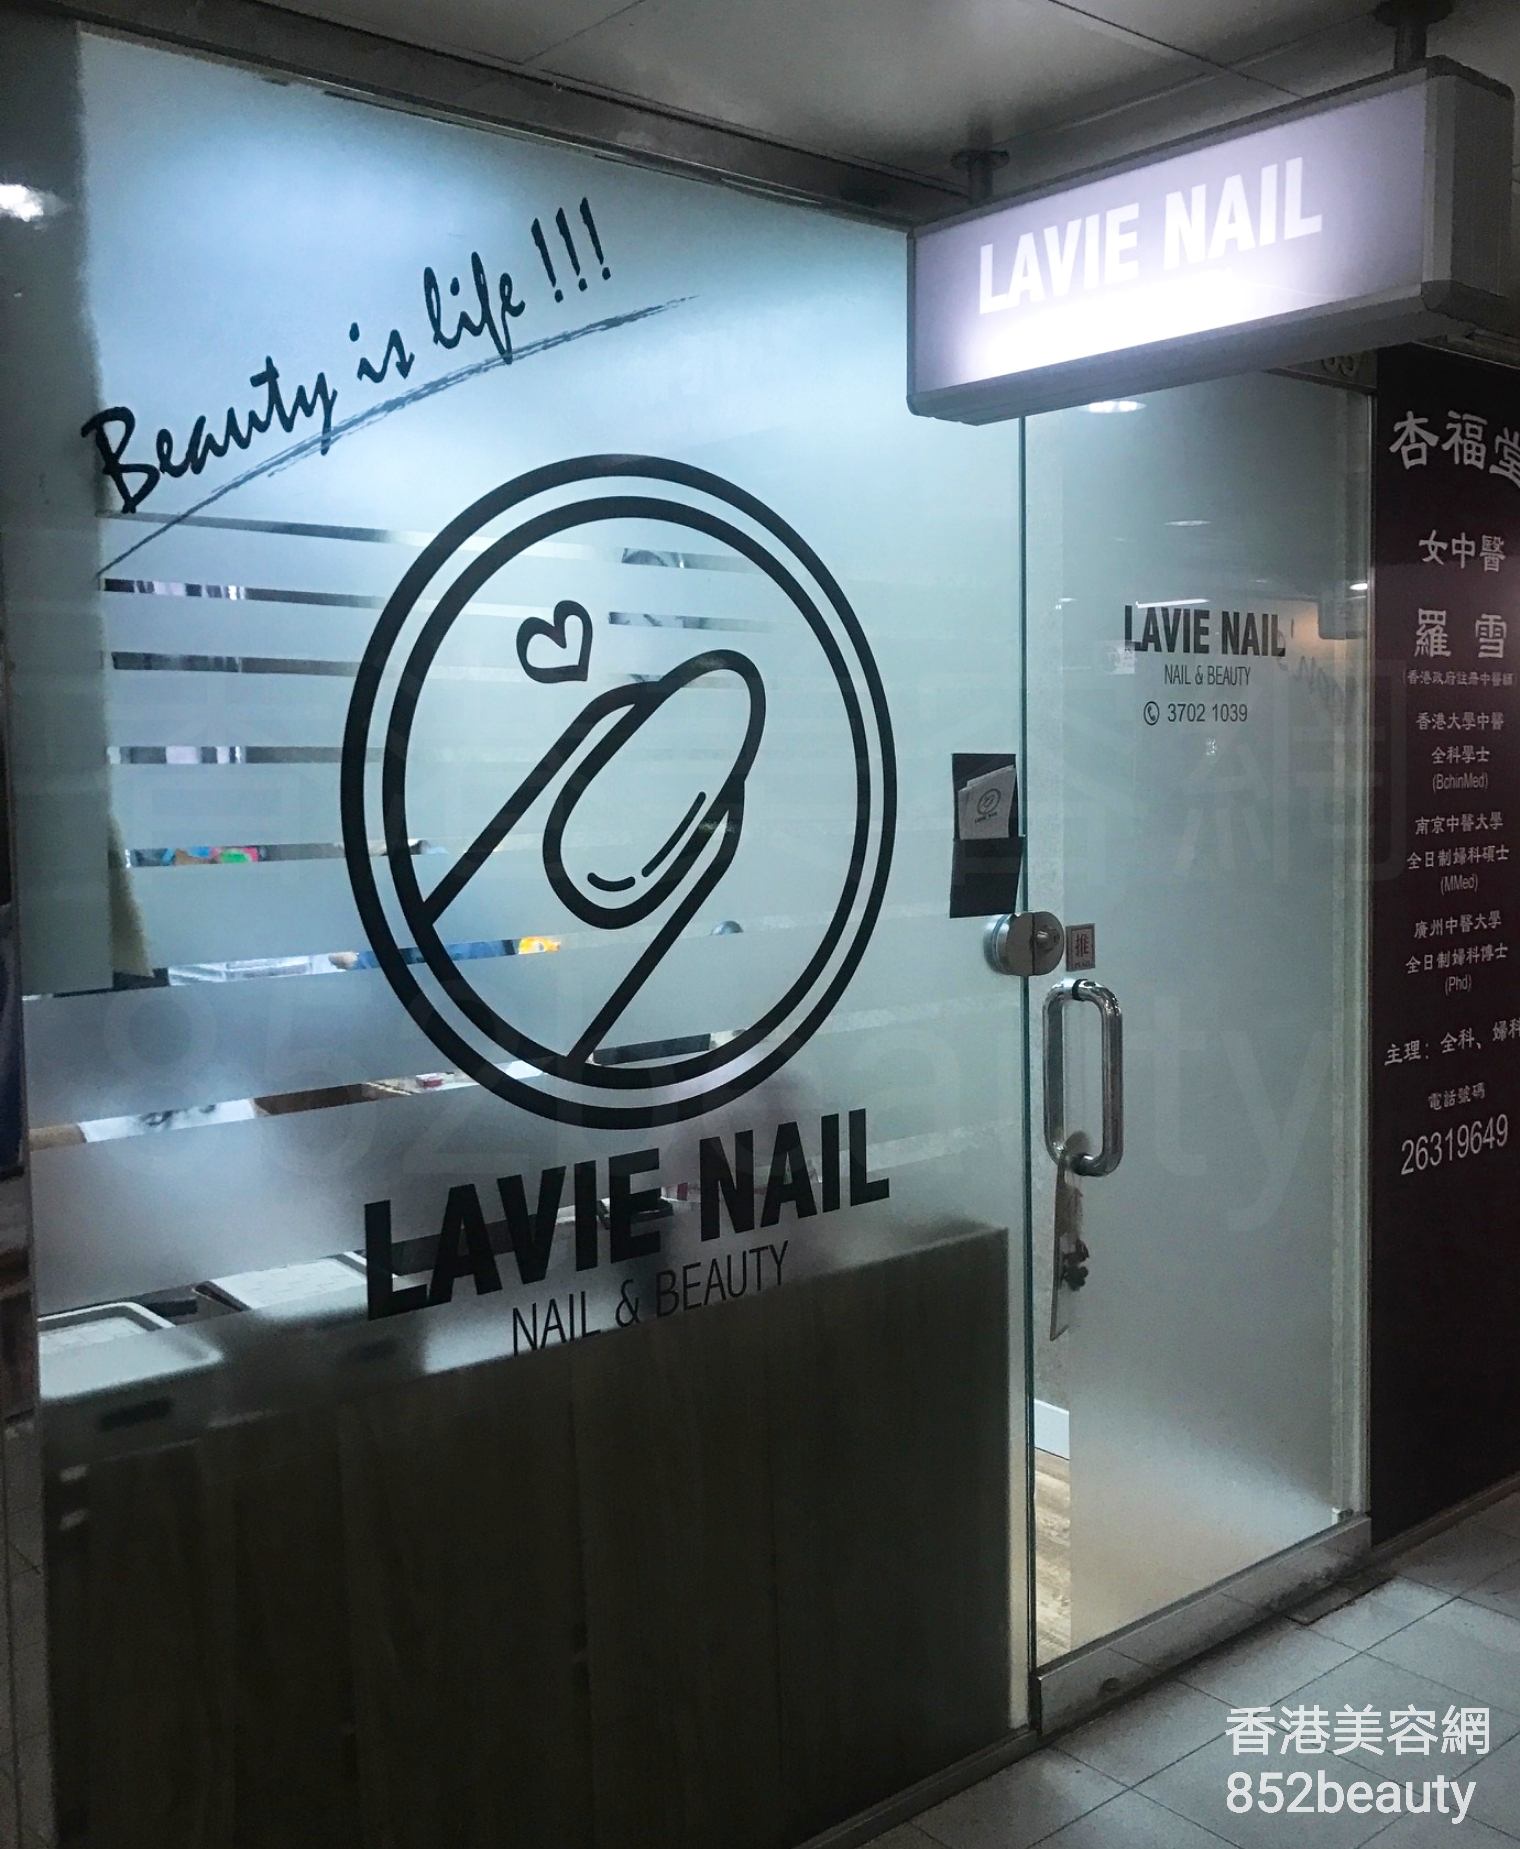 Manicure: LaVie Nail